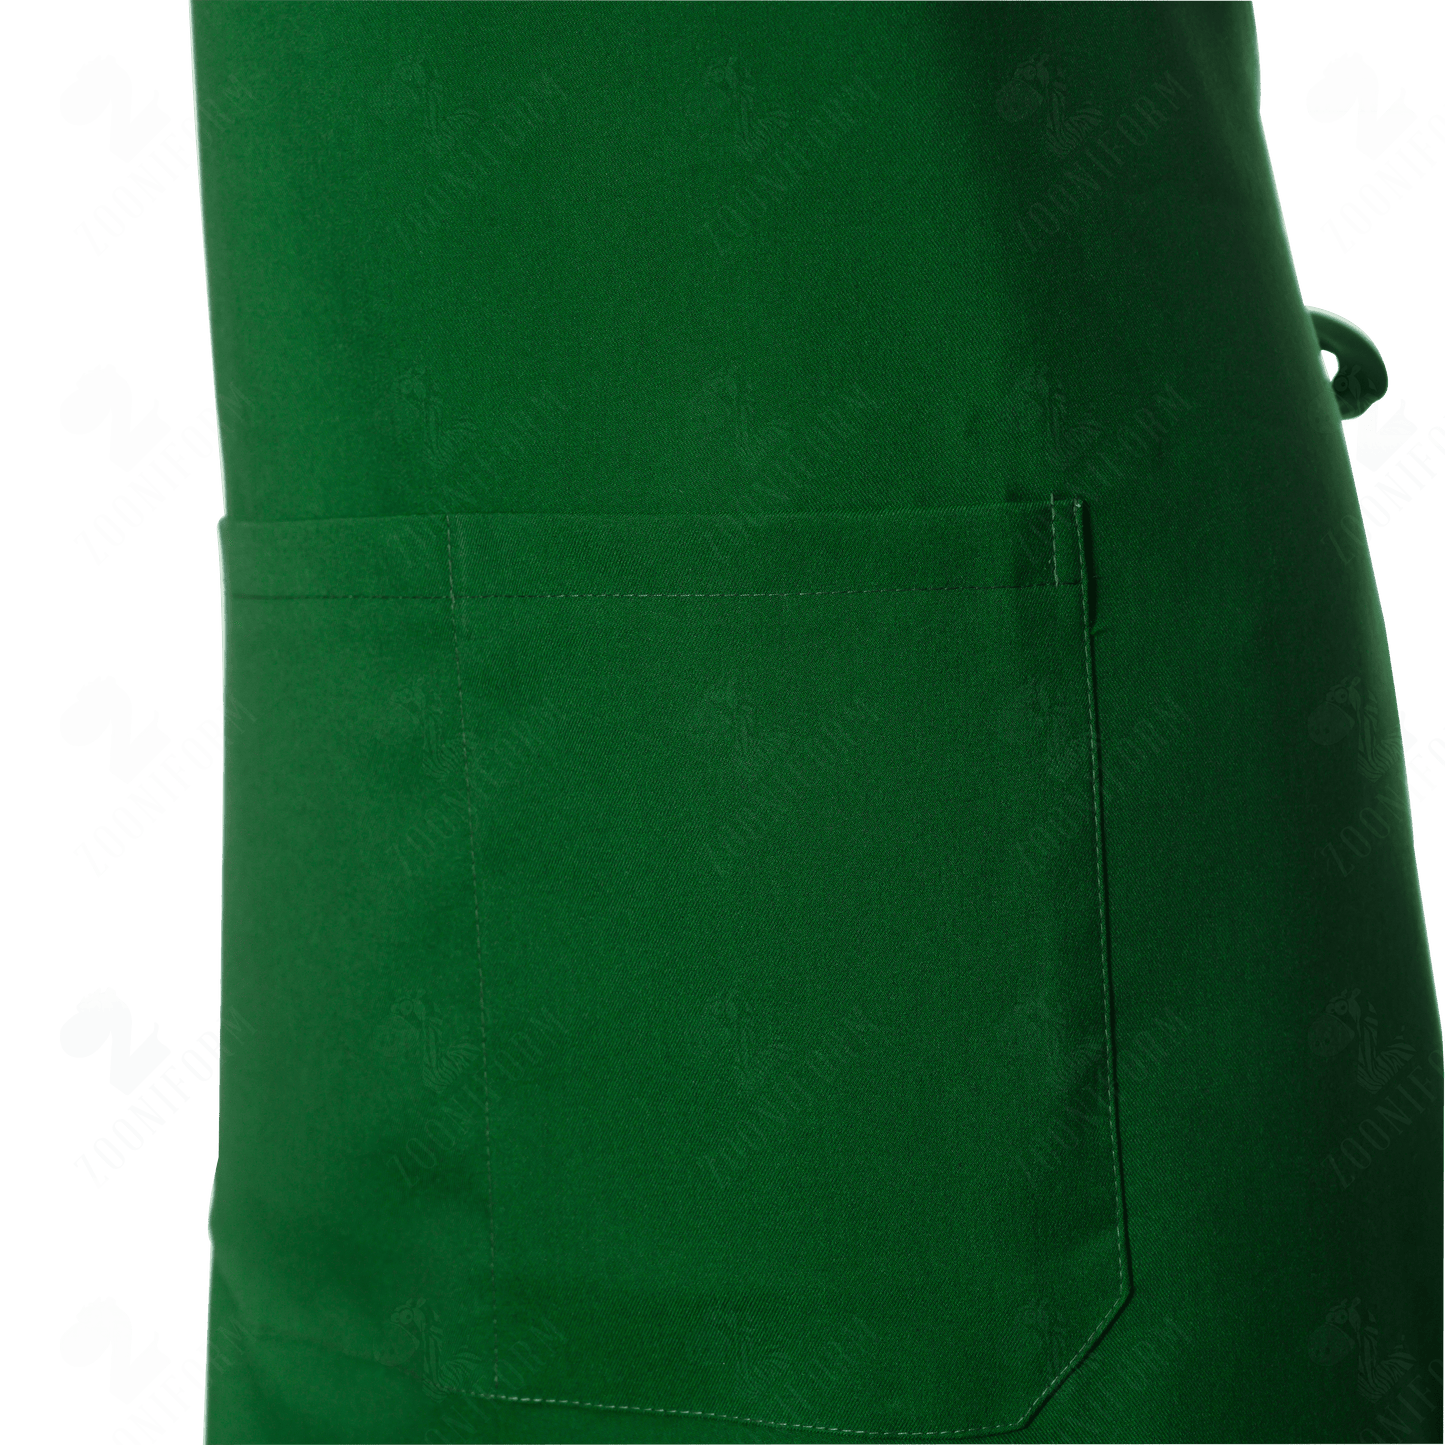 Green Bib Apron Two Pockets